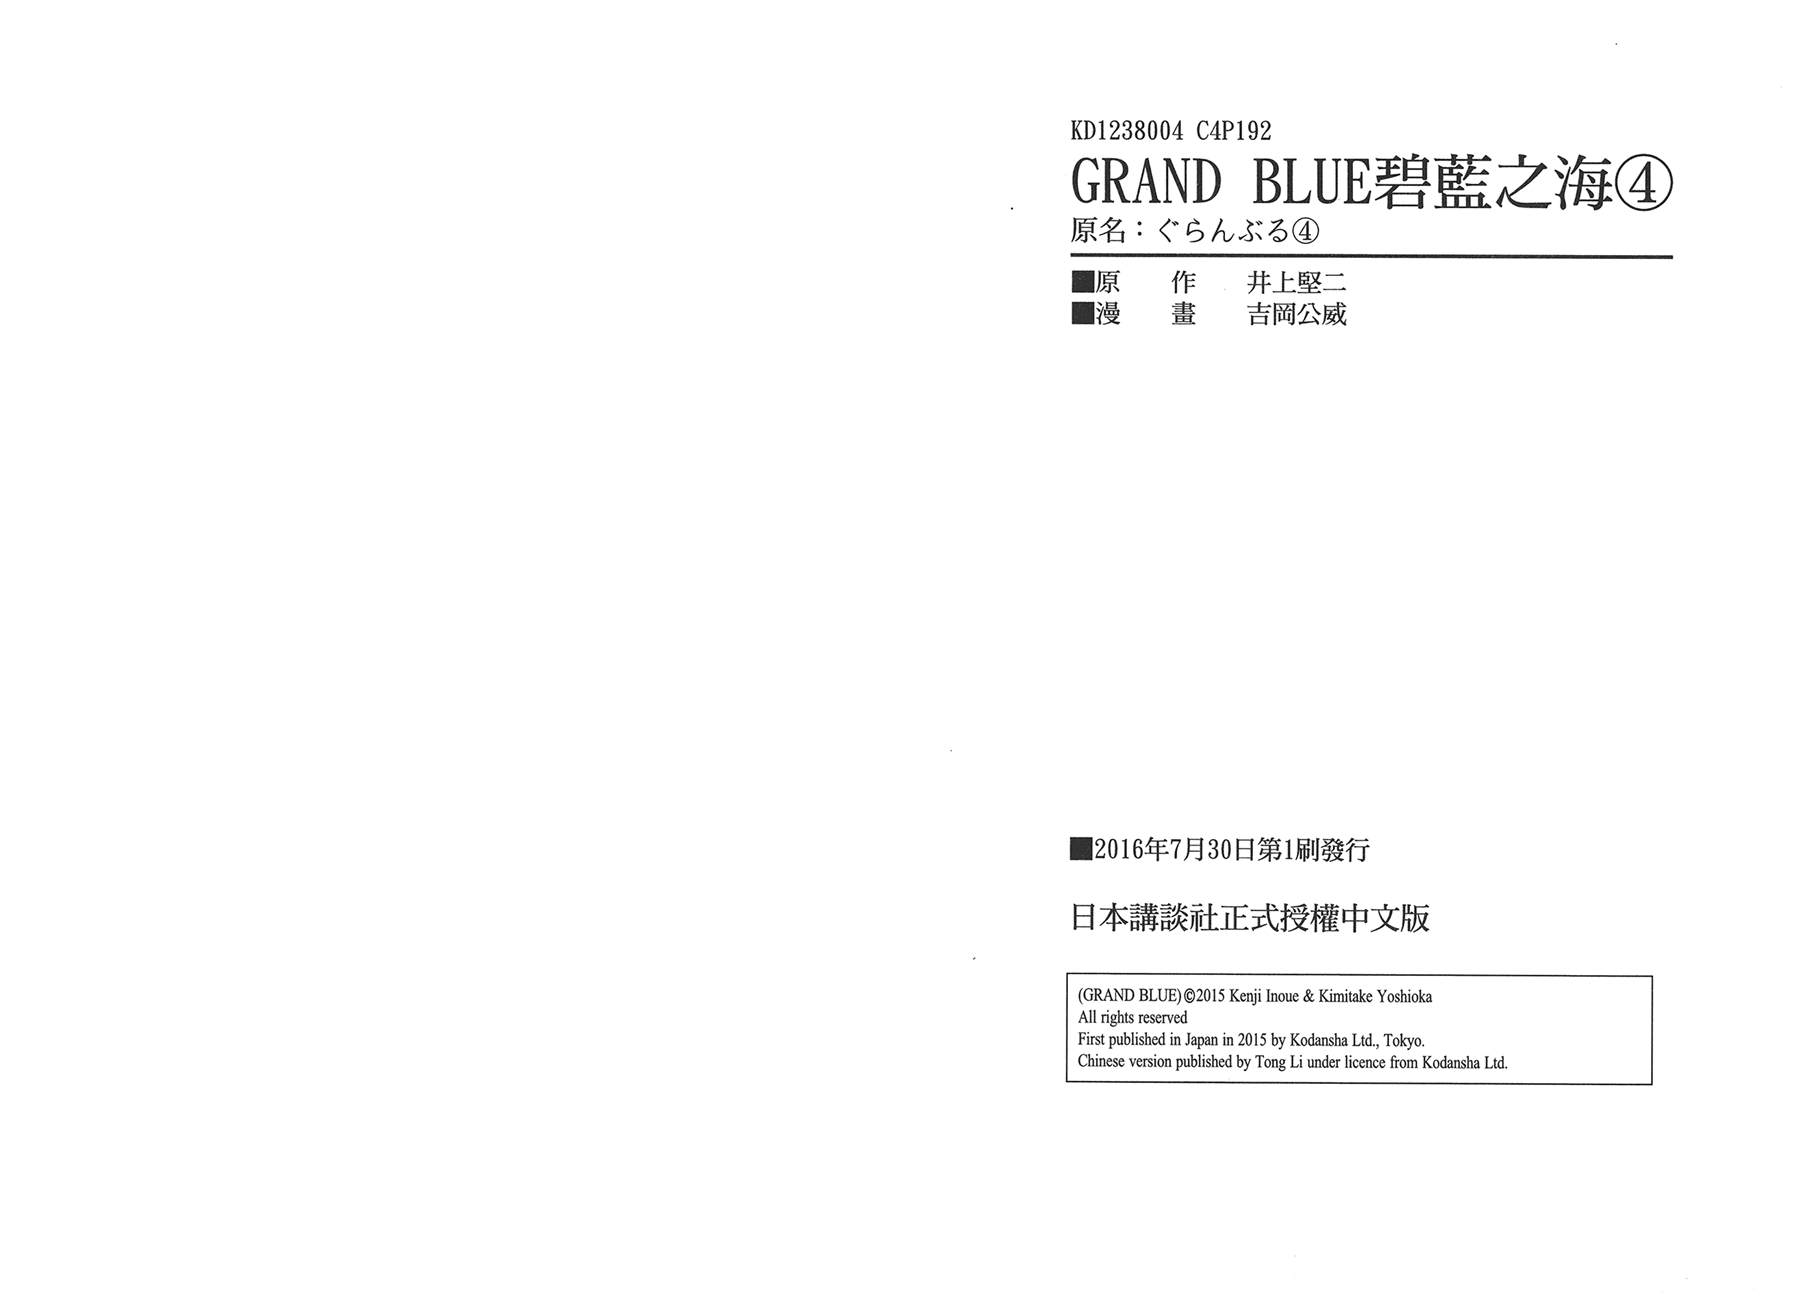 GrandBlue - 第4卷(2/2) - 5